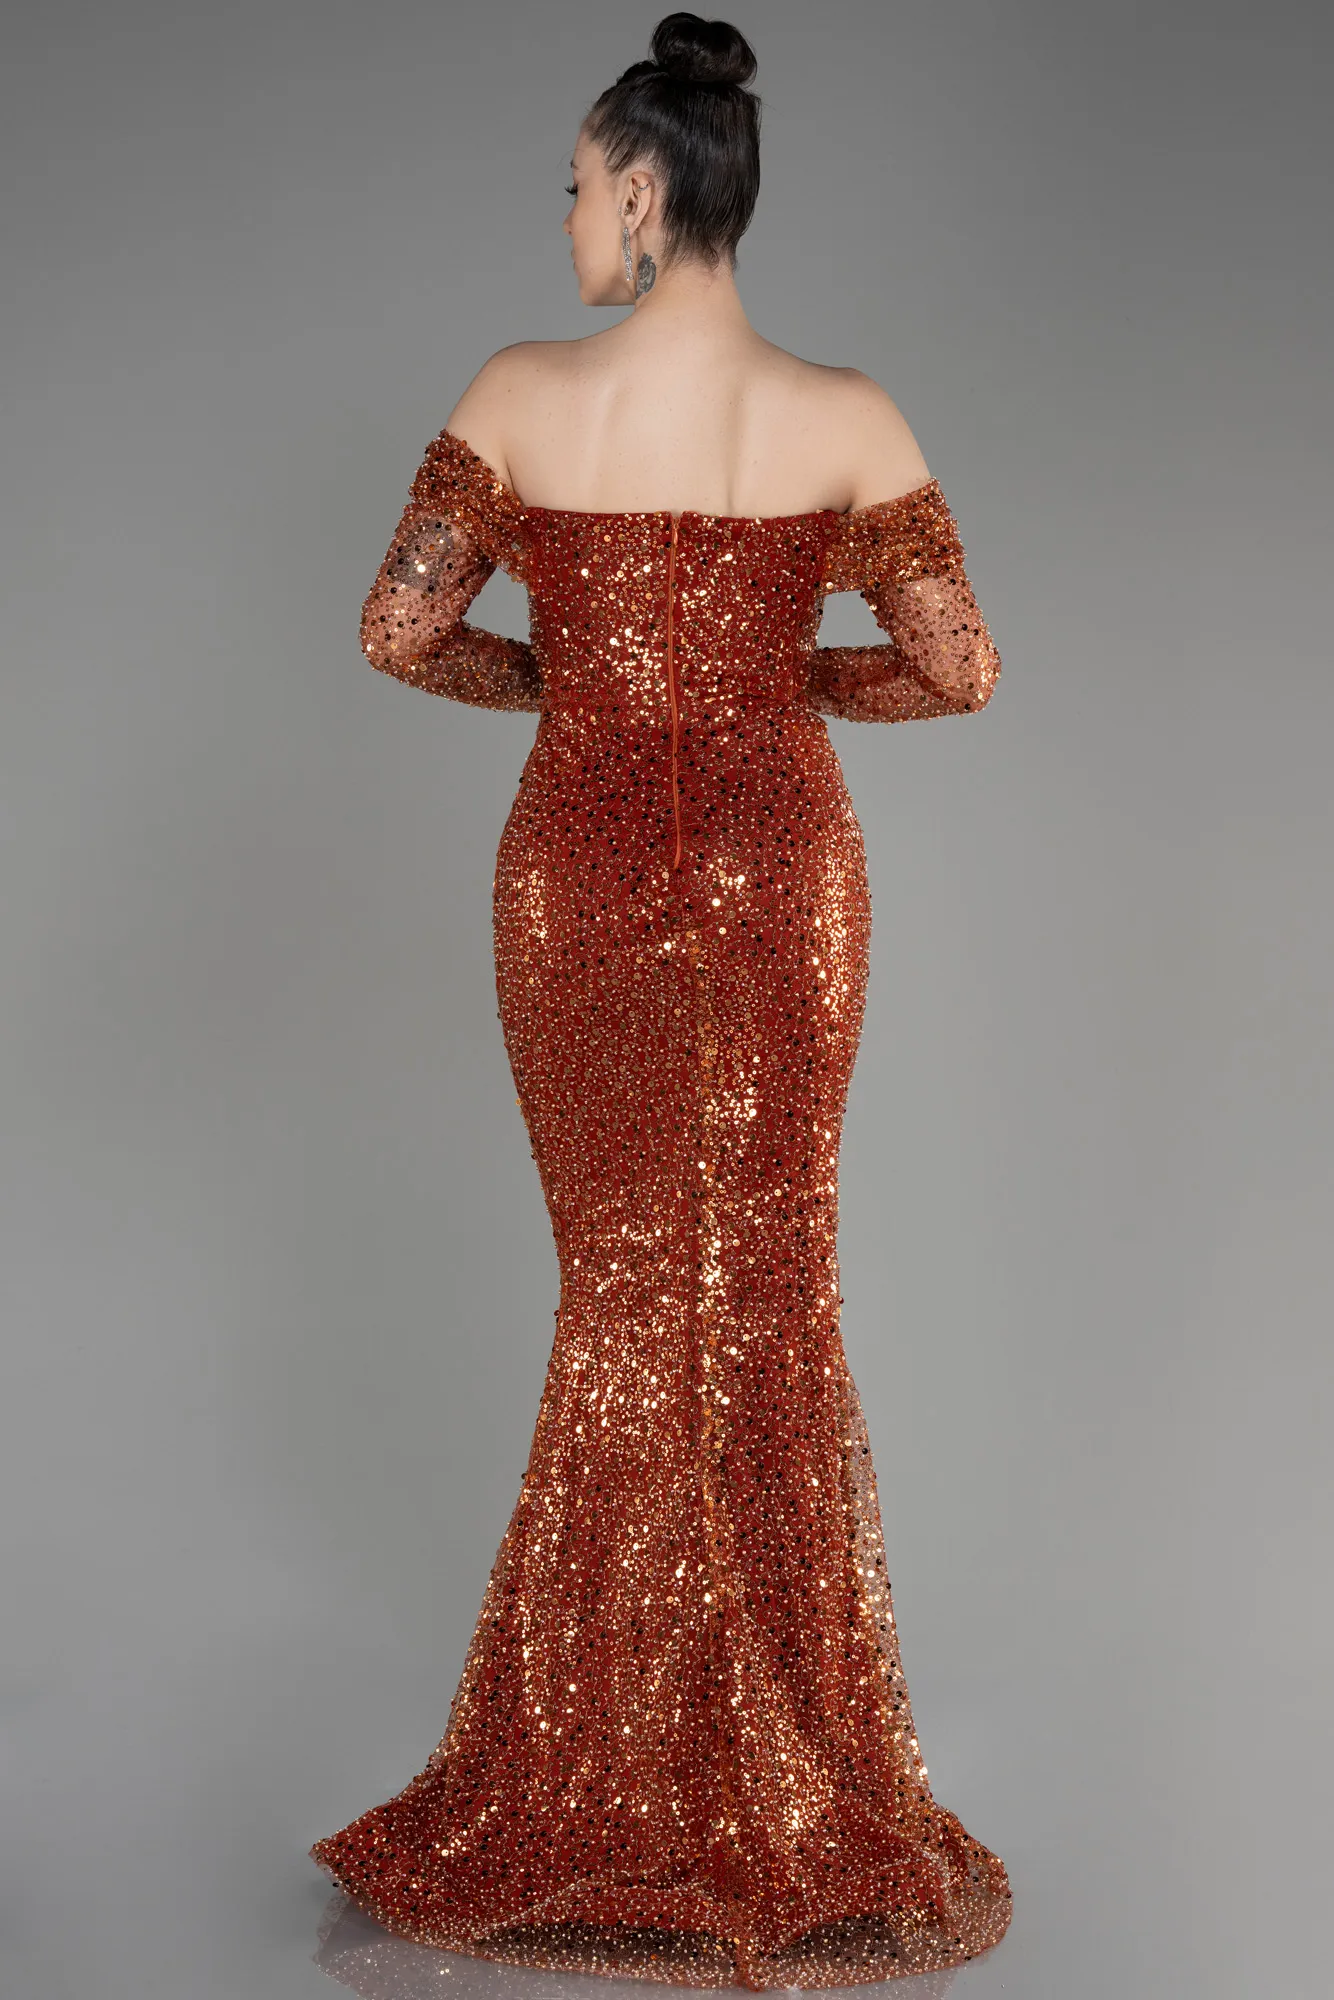 Cinnamon-Long Scaly Mermaid Prom Dress ABU3829